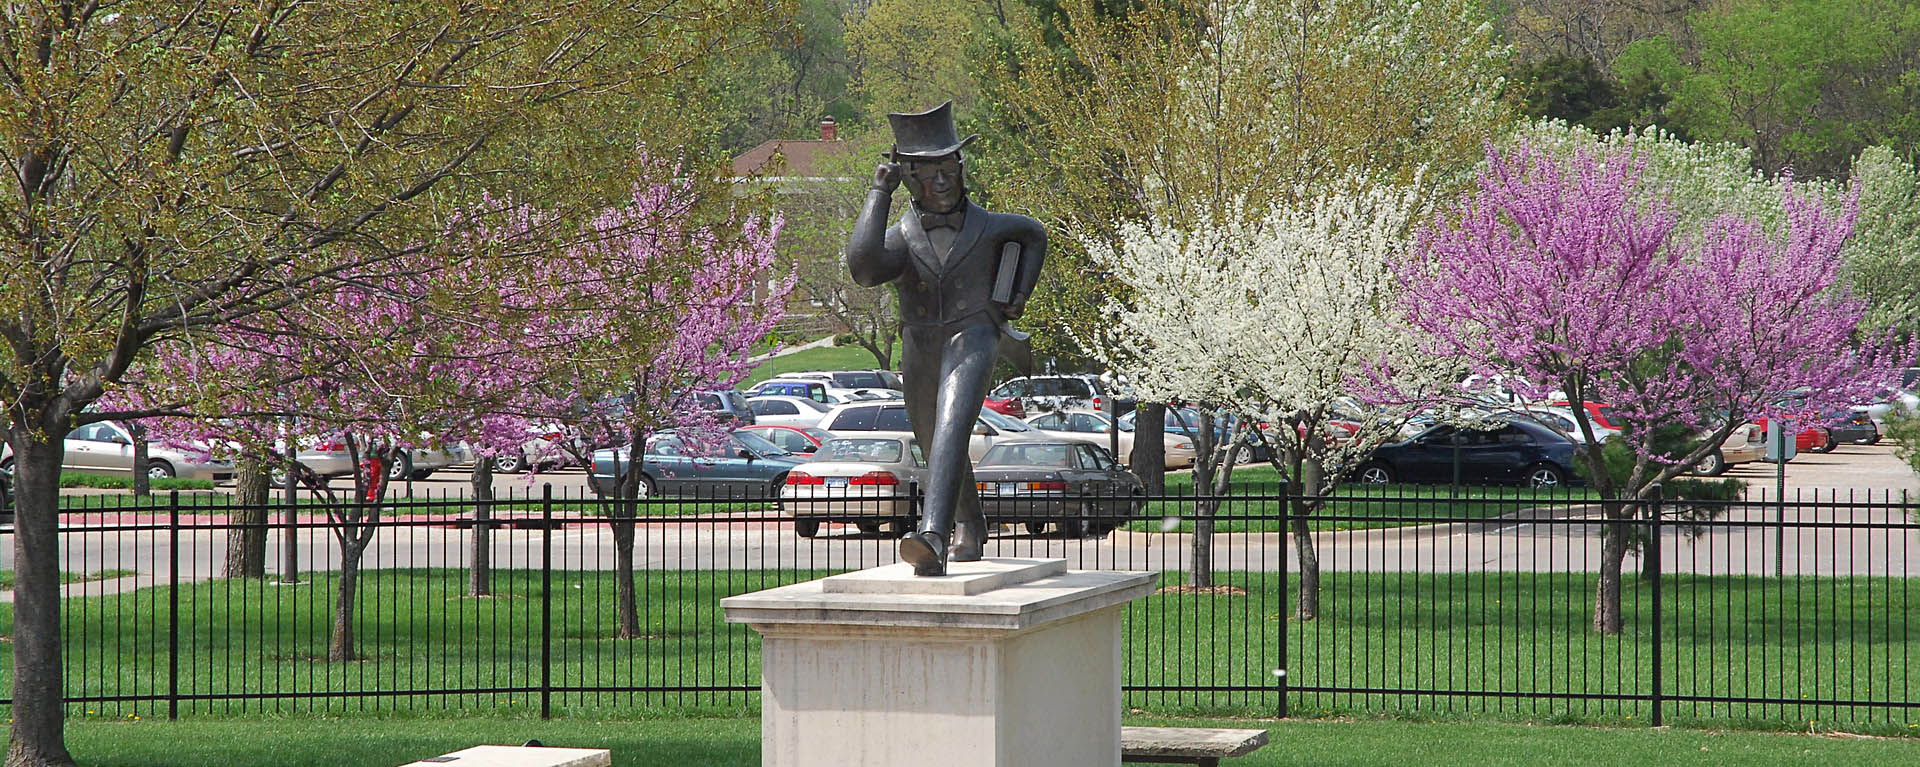 Ichabod statue by Bradbury Thompson Alumni Center